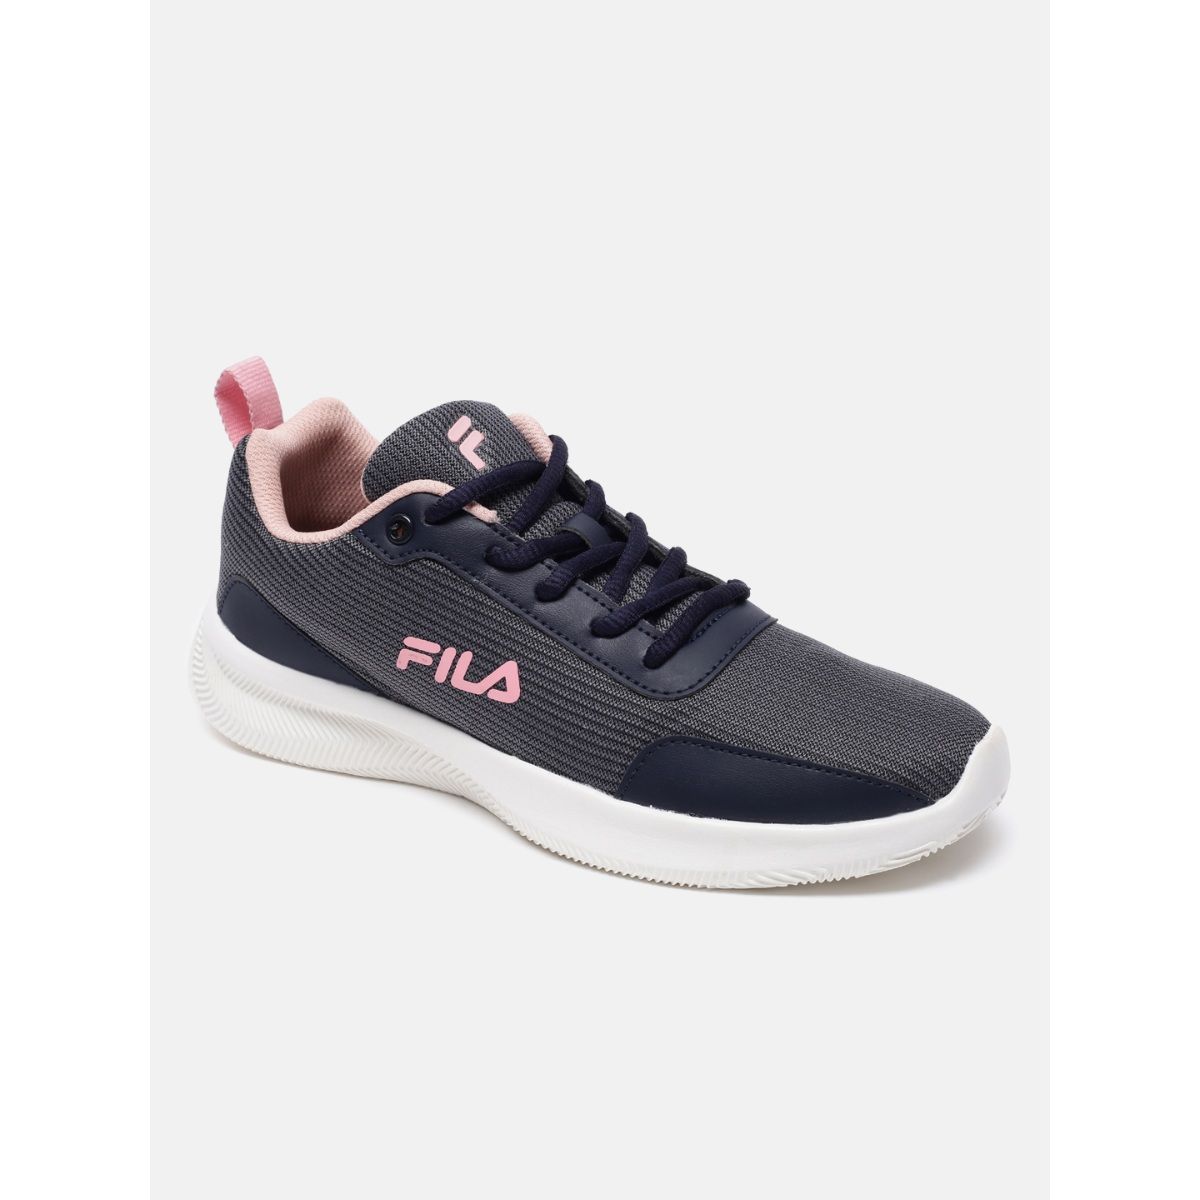 FILA Sneakers For Men - Buy FILA Sneakers For Men Online at Best Price -  Shop Online for Footwears in India | Flipkart.com